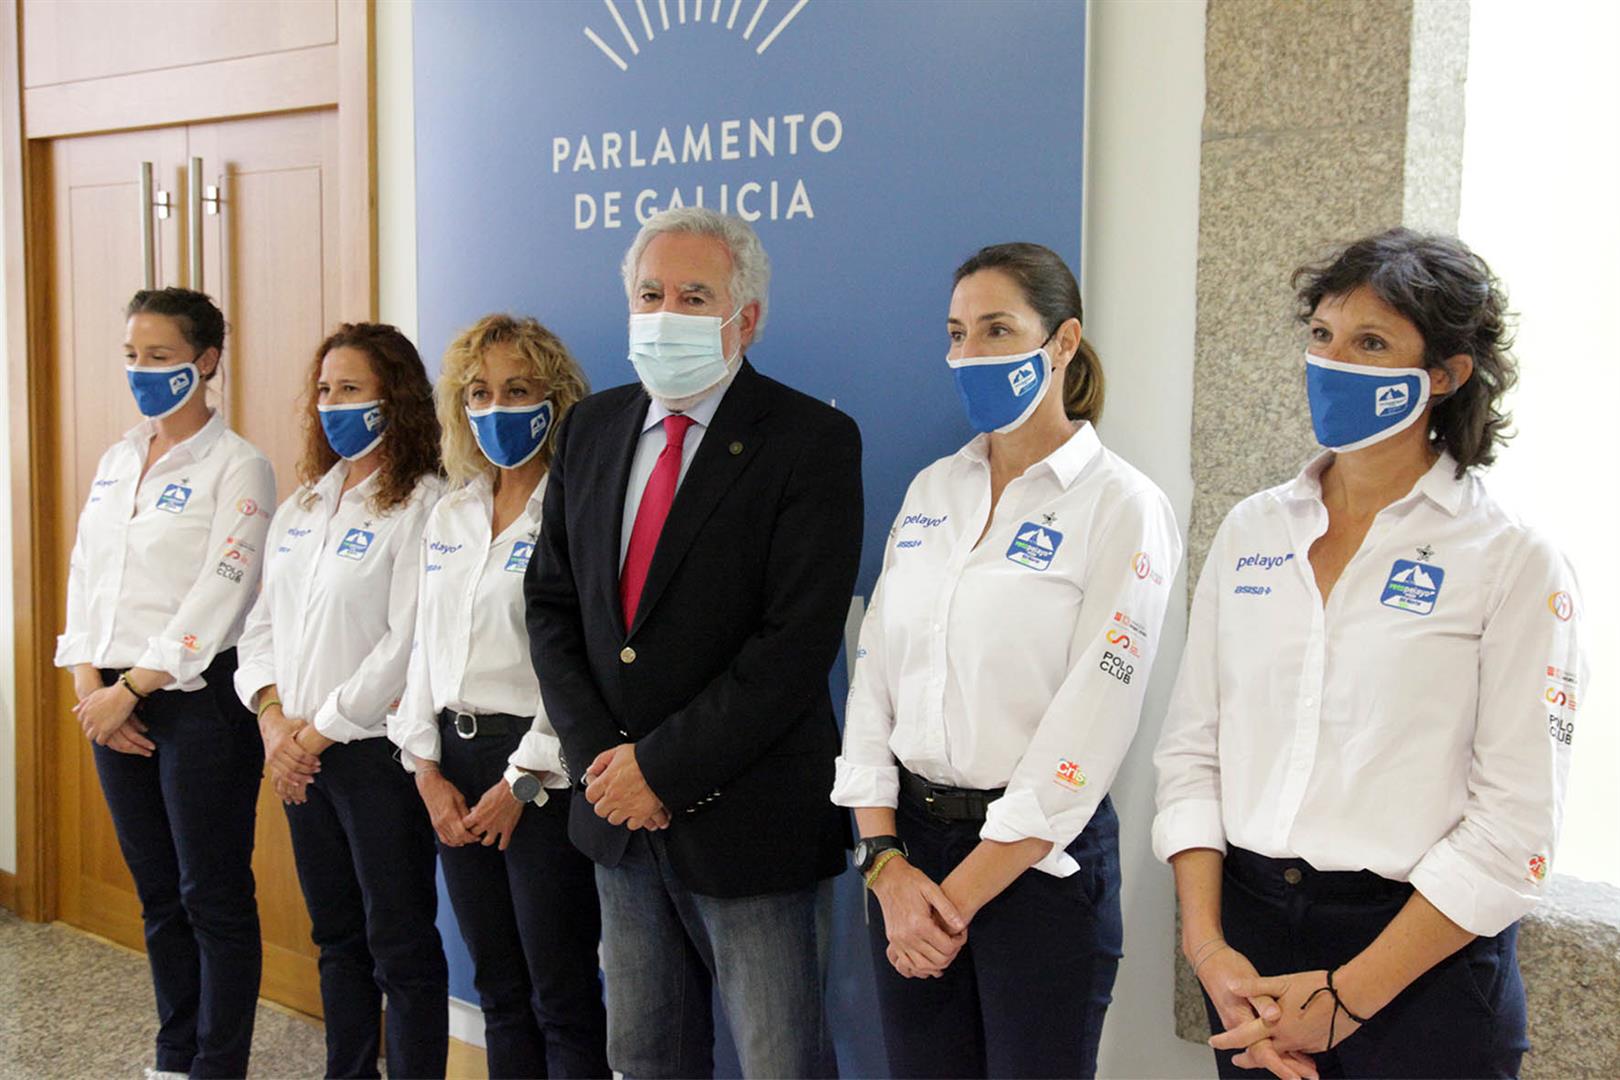 Foto da noticia:As participantes no “Reto Pelayo Vida” visitan o Parlamento de Galicia